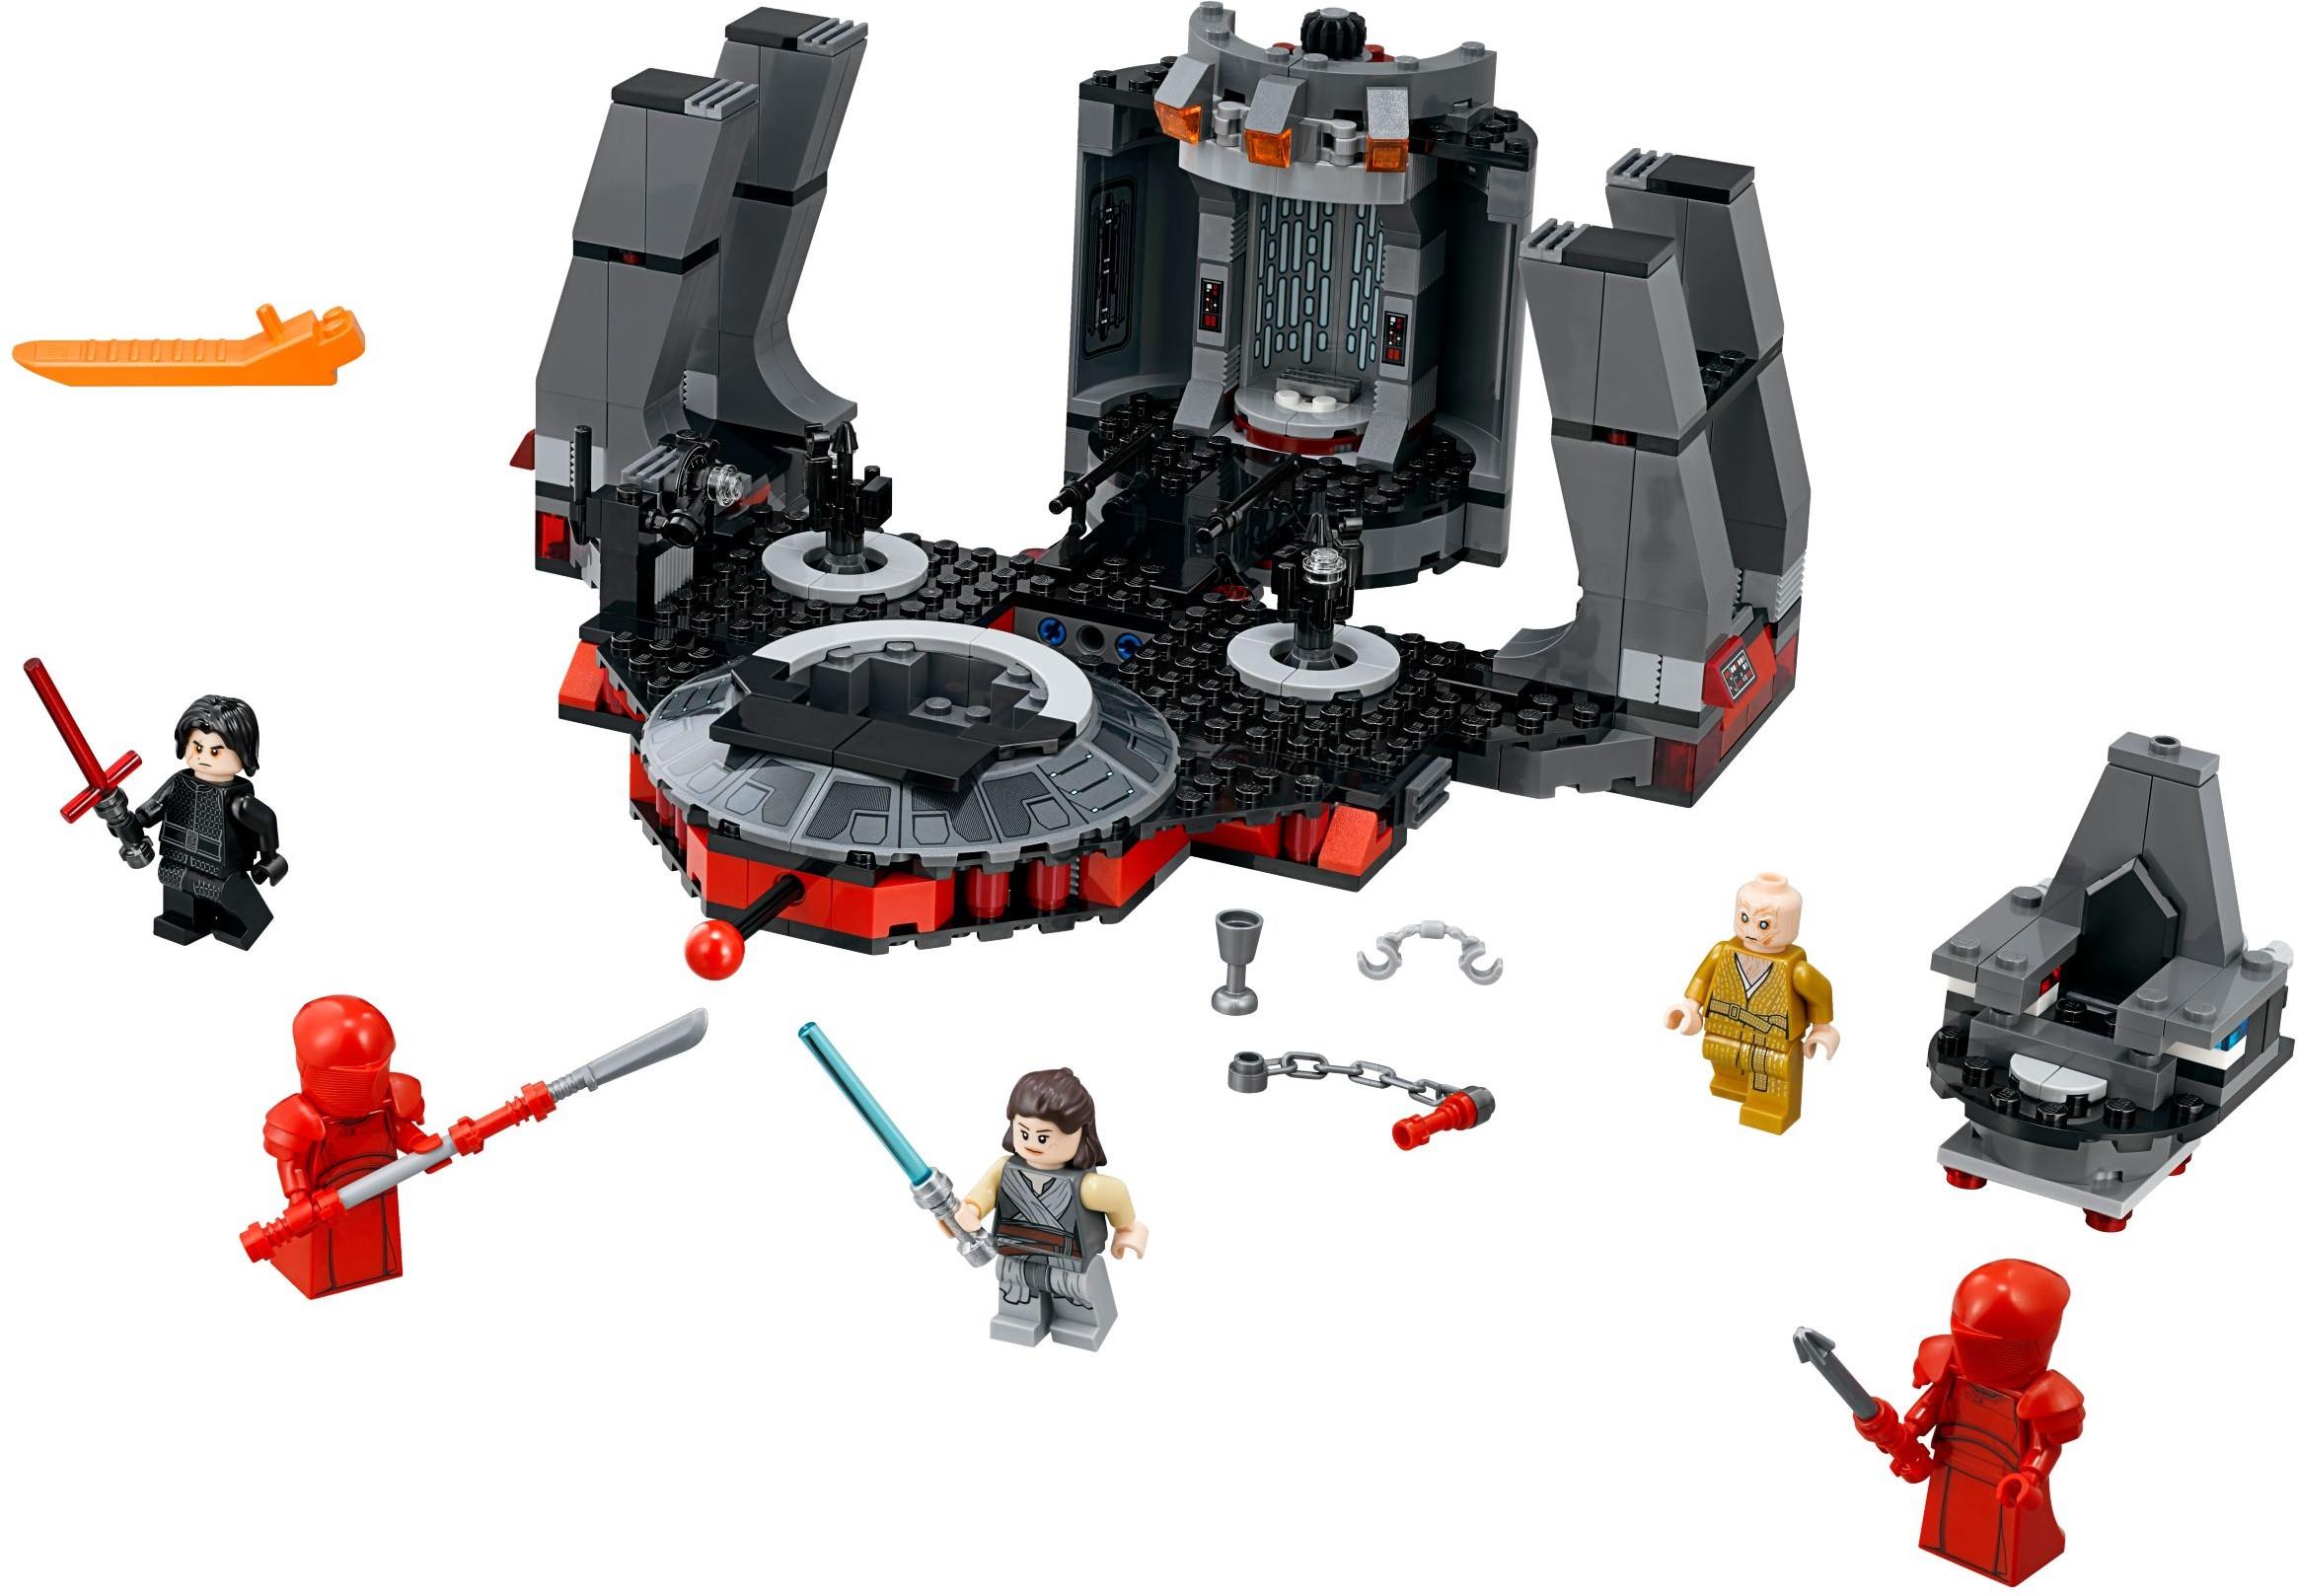 Lego 30380 Kylo Ren's Shuttle - Lego Star Wars set for sale best price